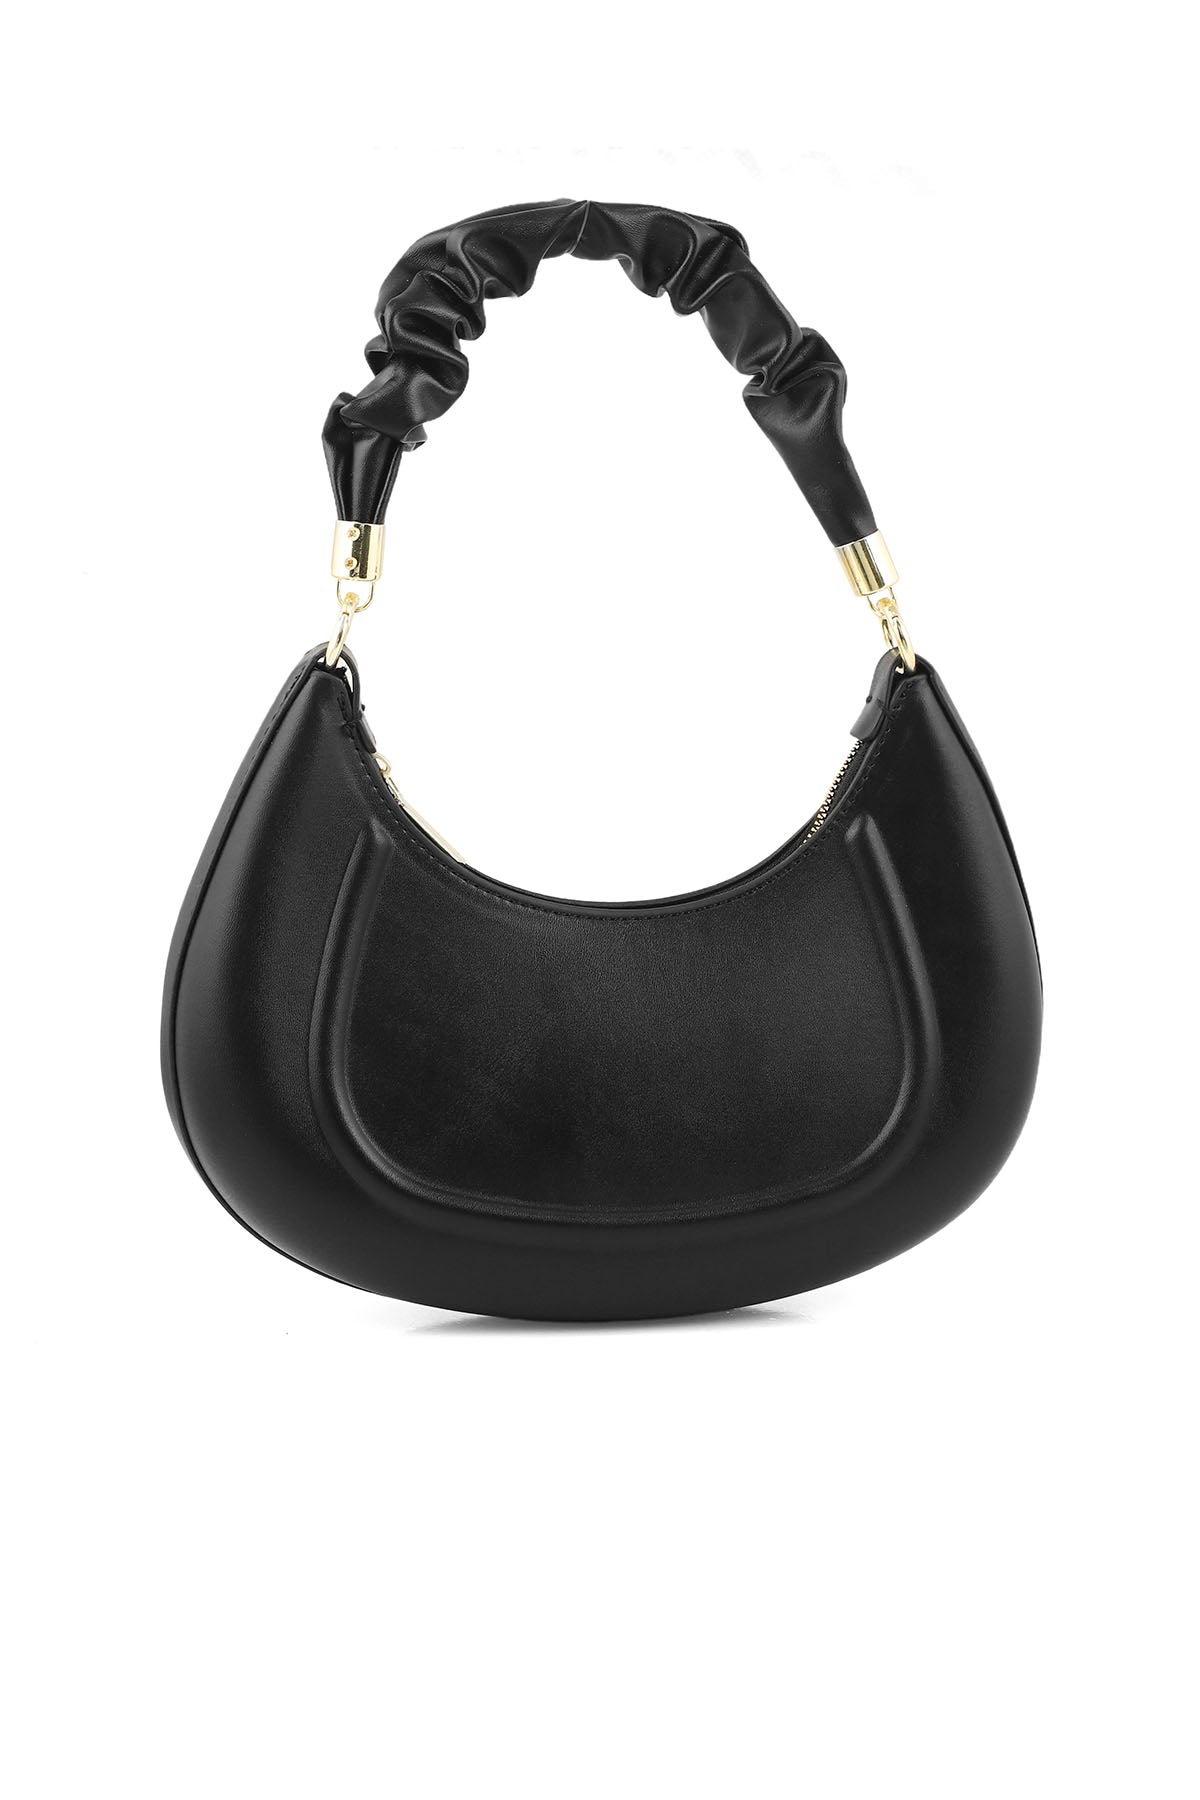 Hobo Hand Bags B14957-Black